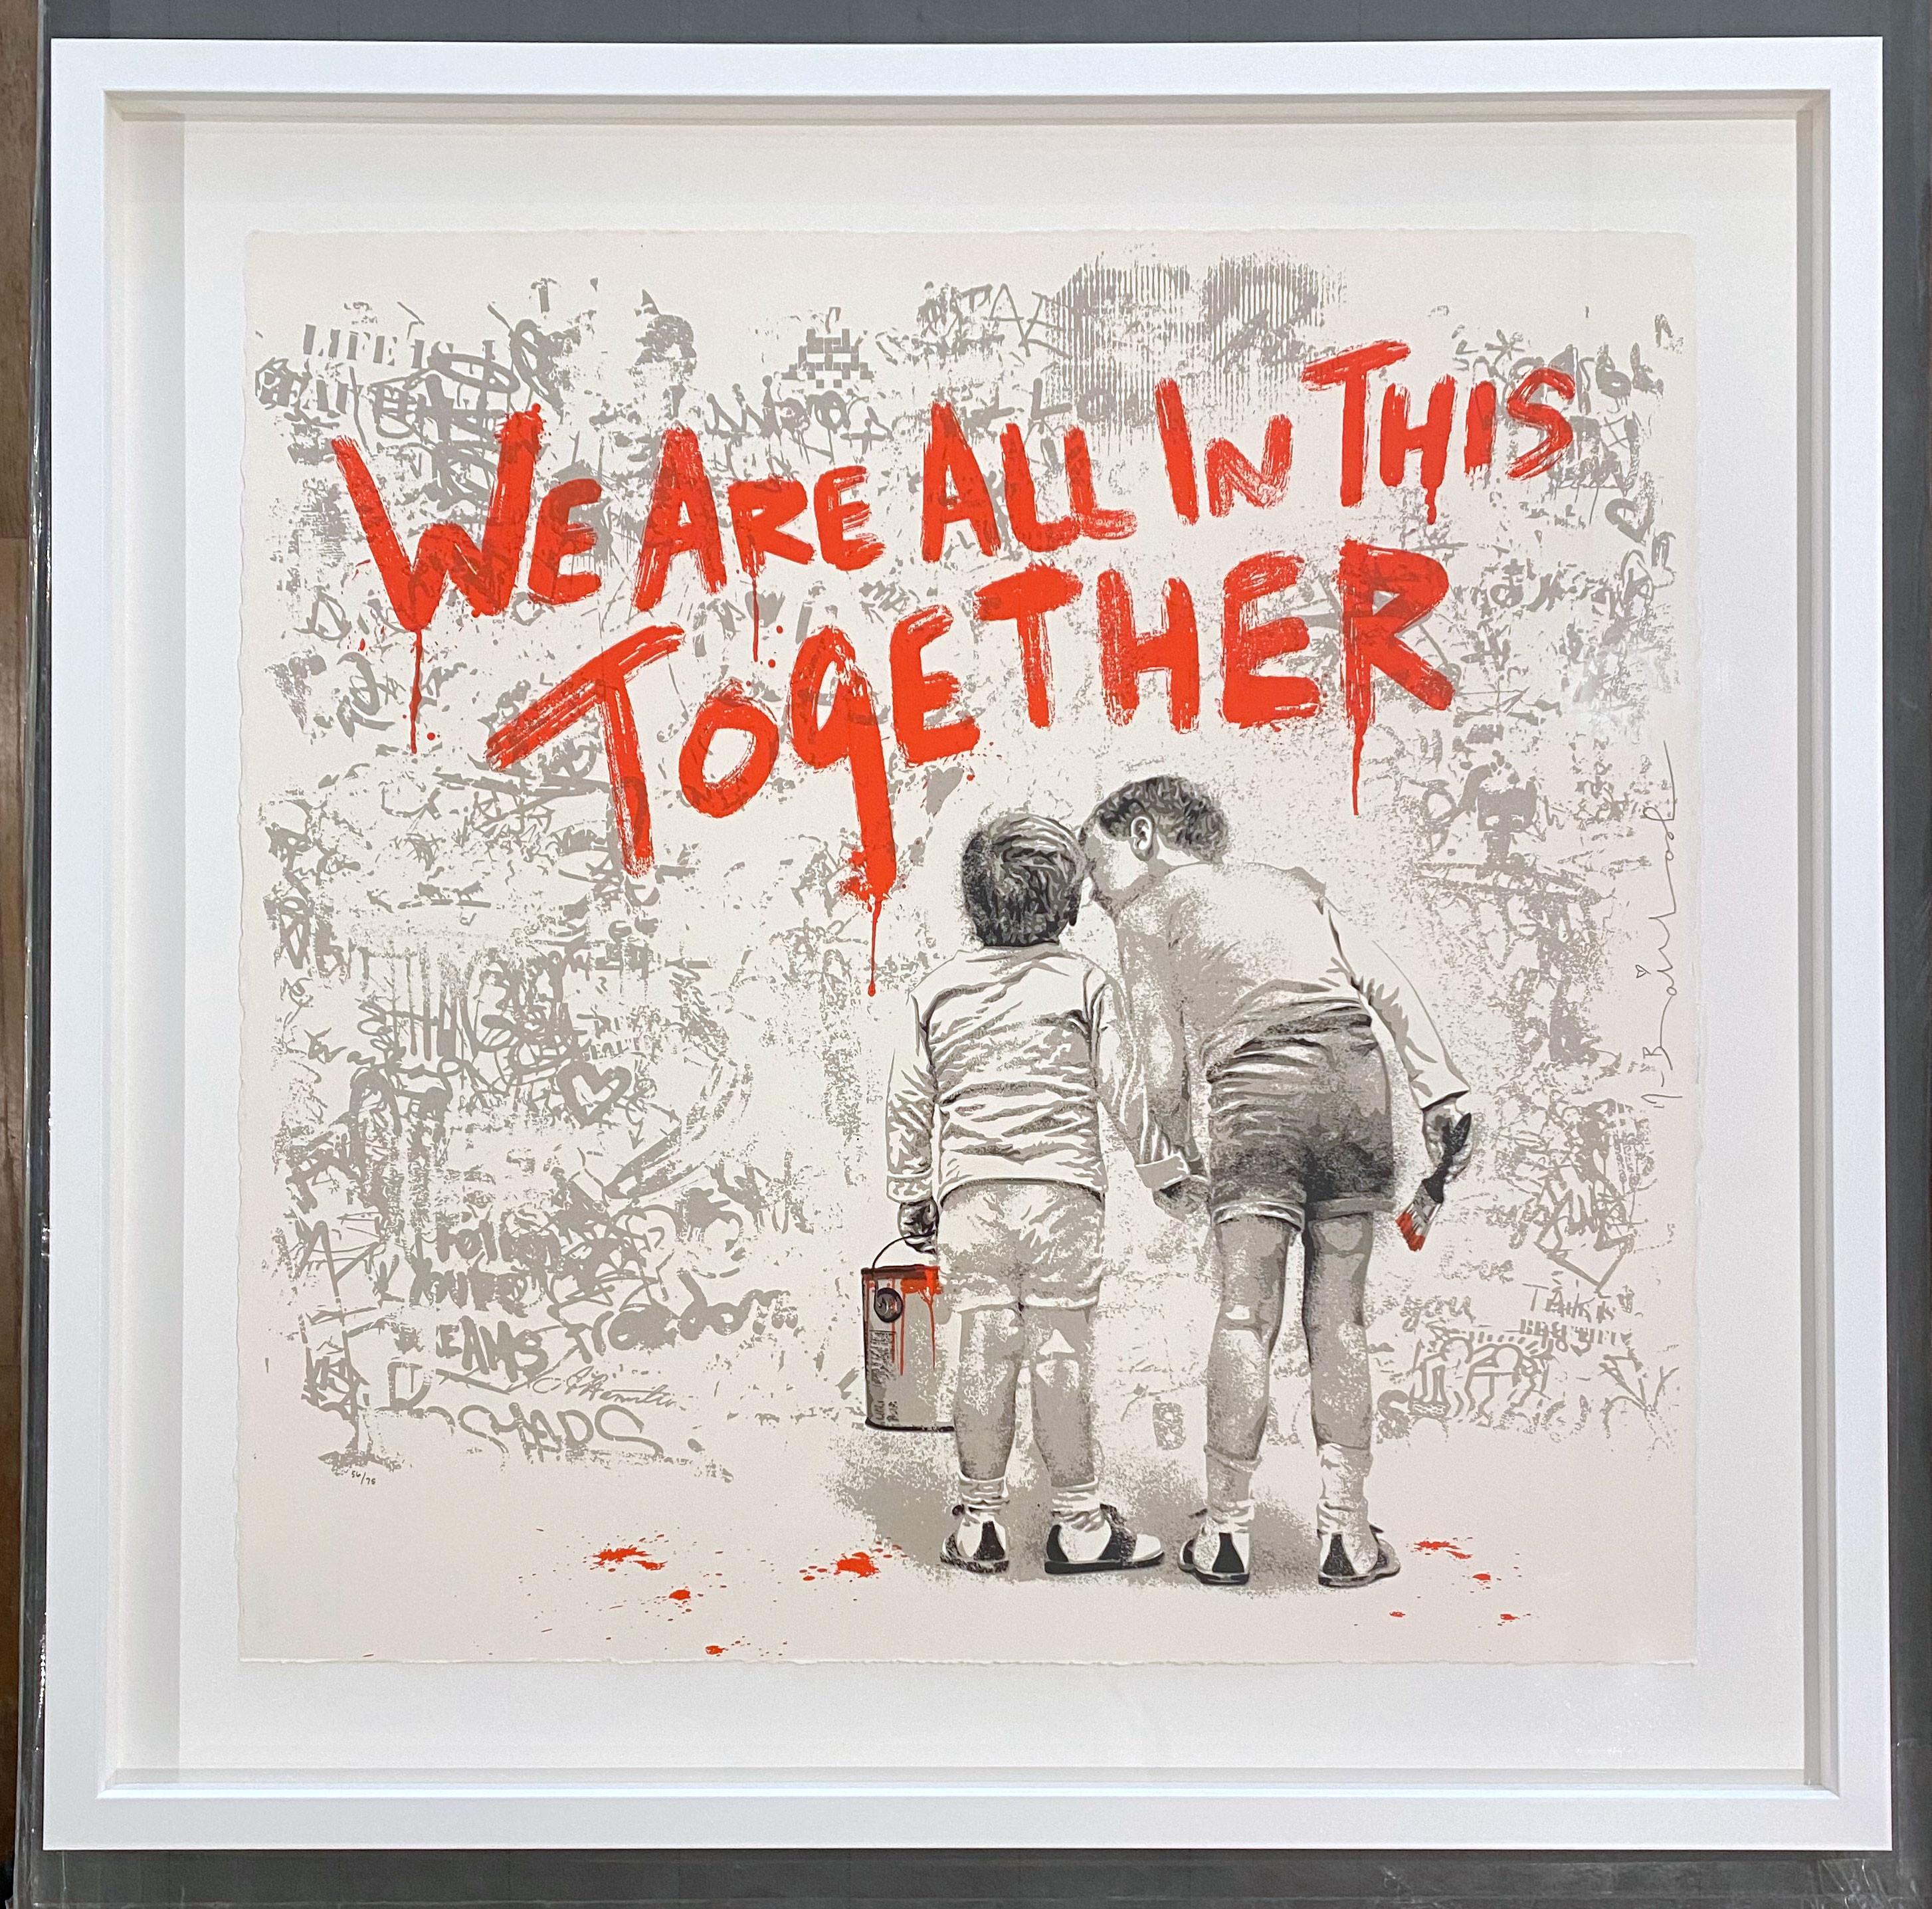 Mr. Brainwash We Are All In This Together (Red)
Artist: Mr. Brainwash
Medium: Silkscreen
Title: We Are All In This Together (Red)
Year: 2020
Edition: 56/75
Framed Size: 28